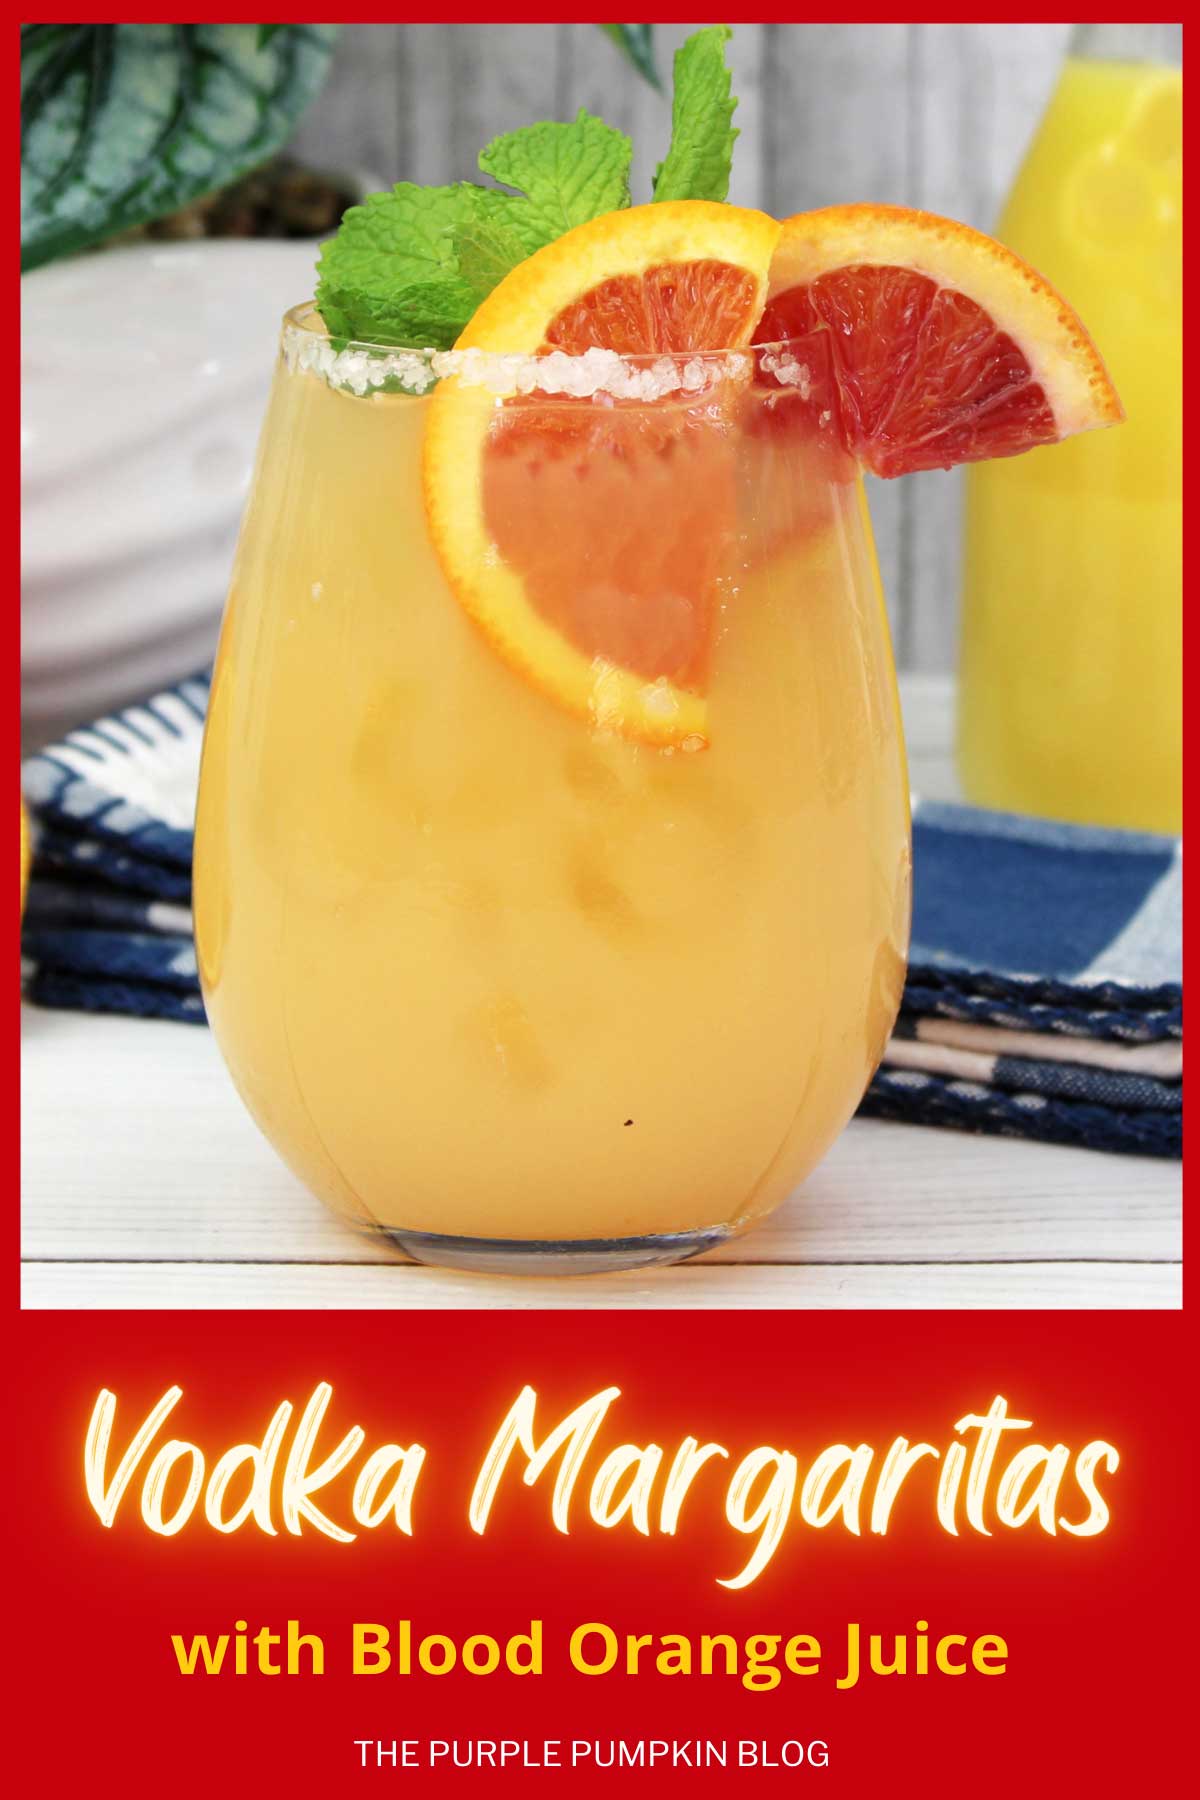 Vodka-Margaritas-with-Blood-Orange-Juice